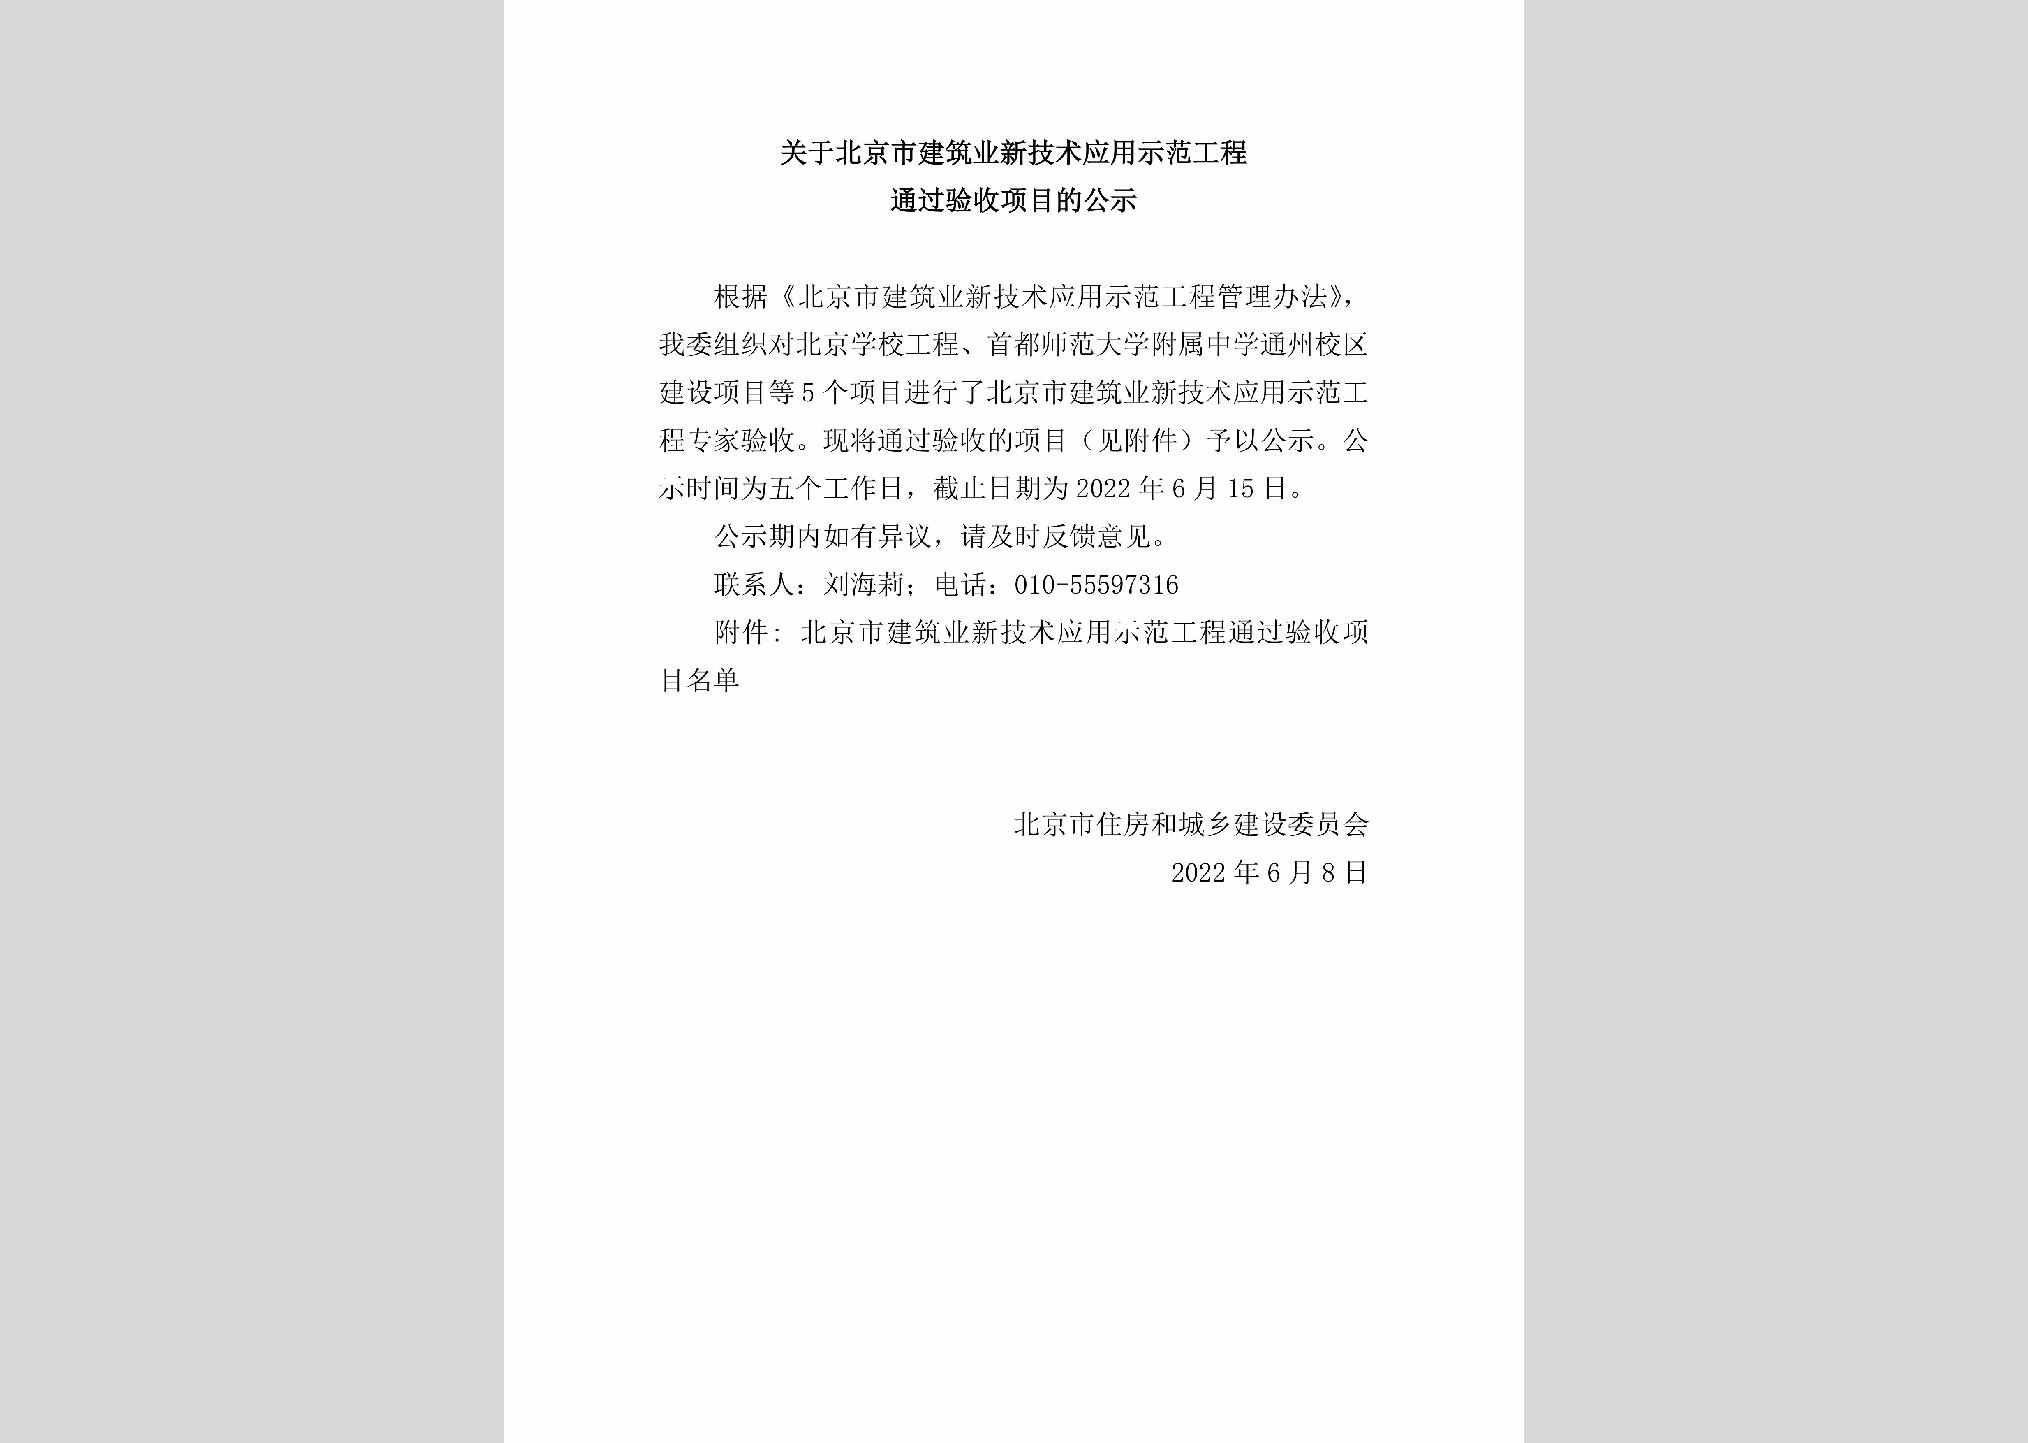 BJ-GCTGYSXM-2022：关于北京市建筑业新技术应用示范工程通过验收项目的公示